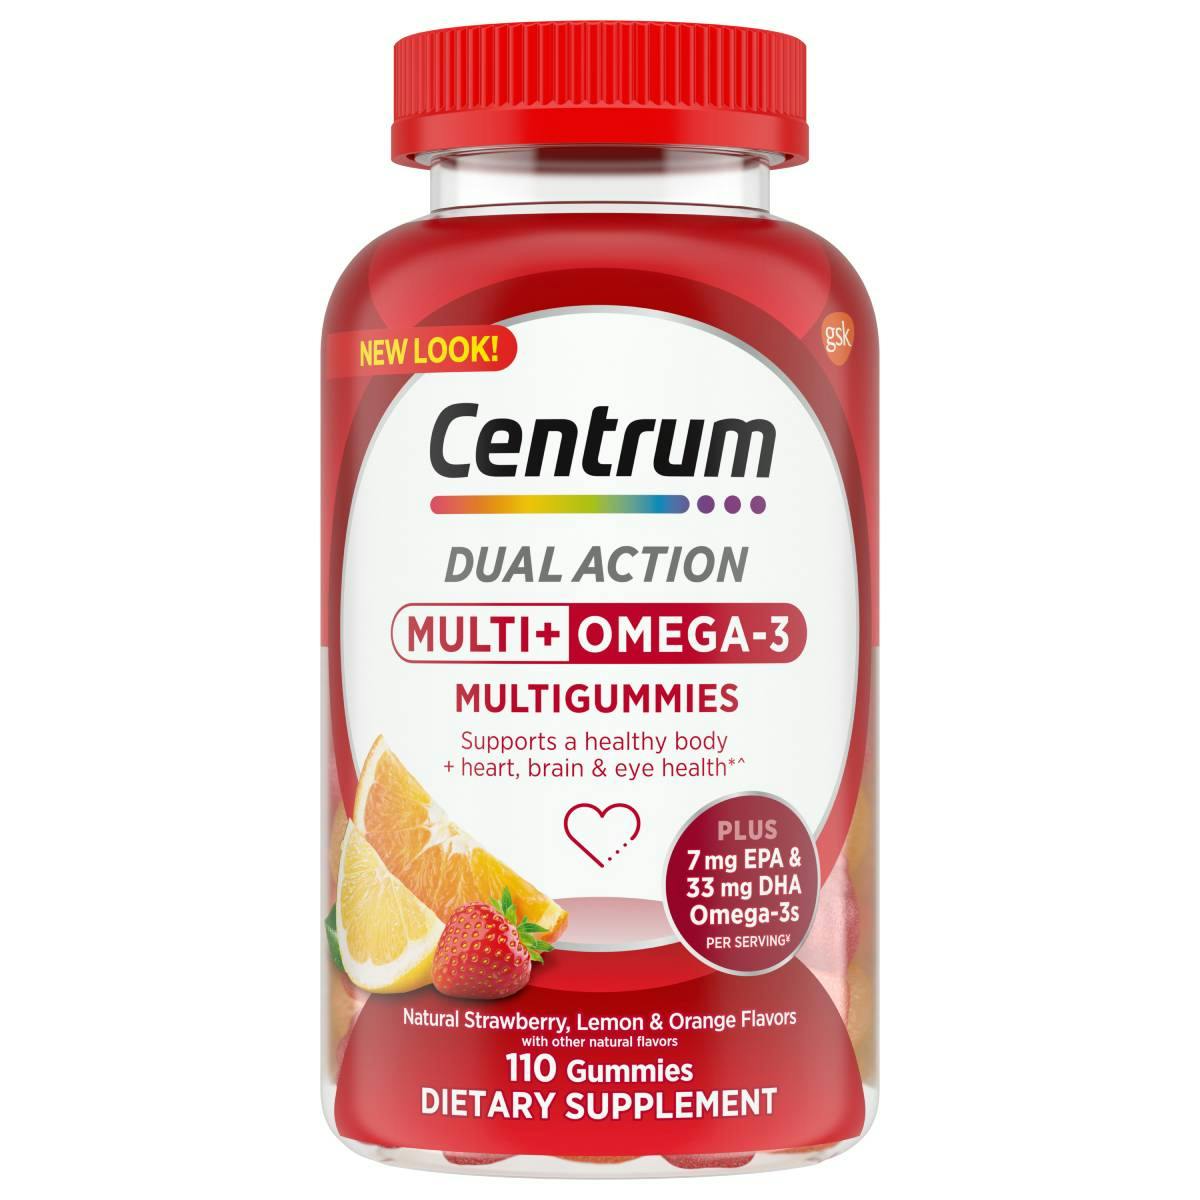 Bottle of Centrum MultiGummies Multi plus Omega 3 multivitamins